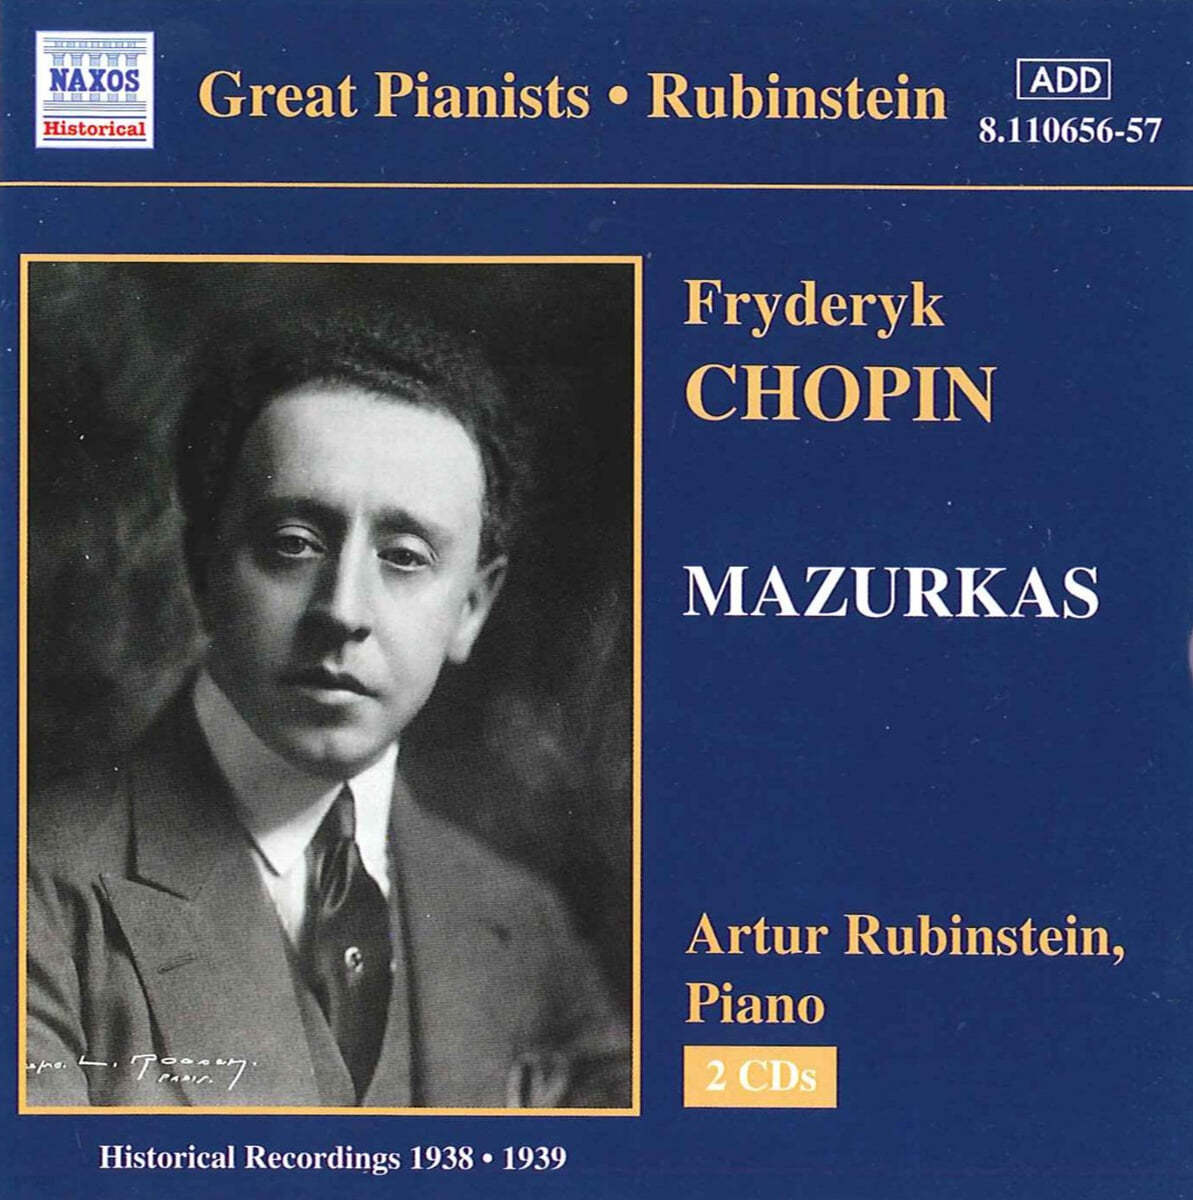 Arthur Rubinstein 쇼팽: 마주르카 (Chopin : Mazurkas) 